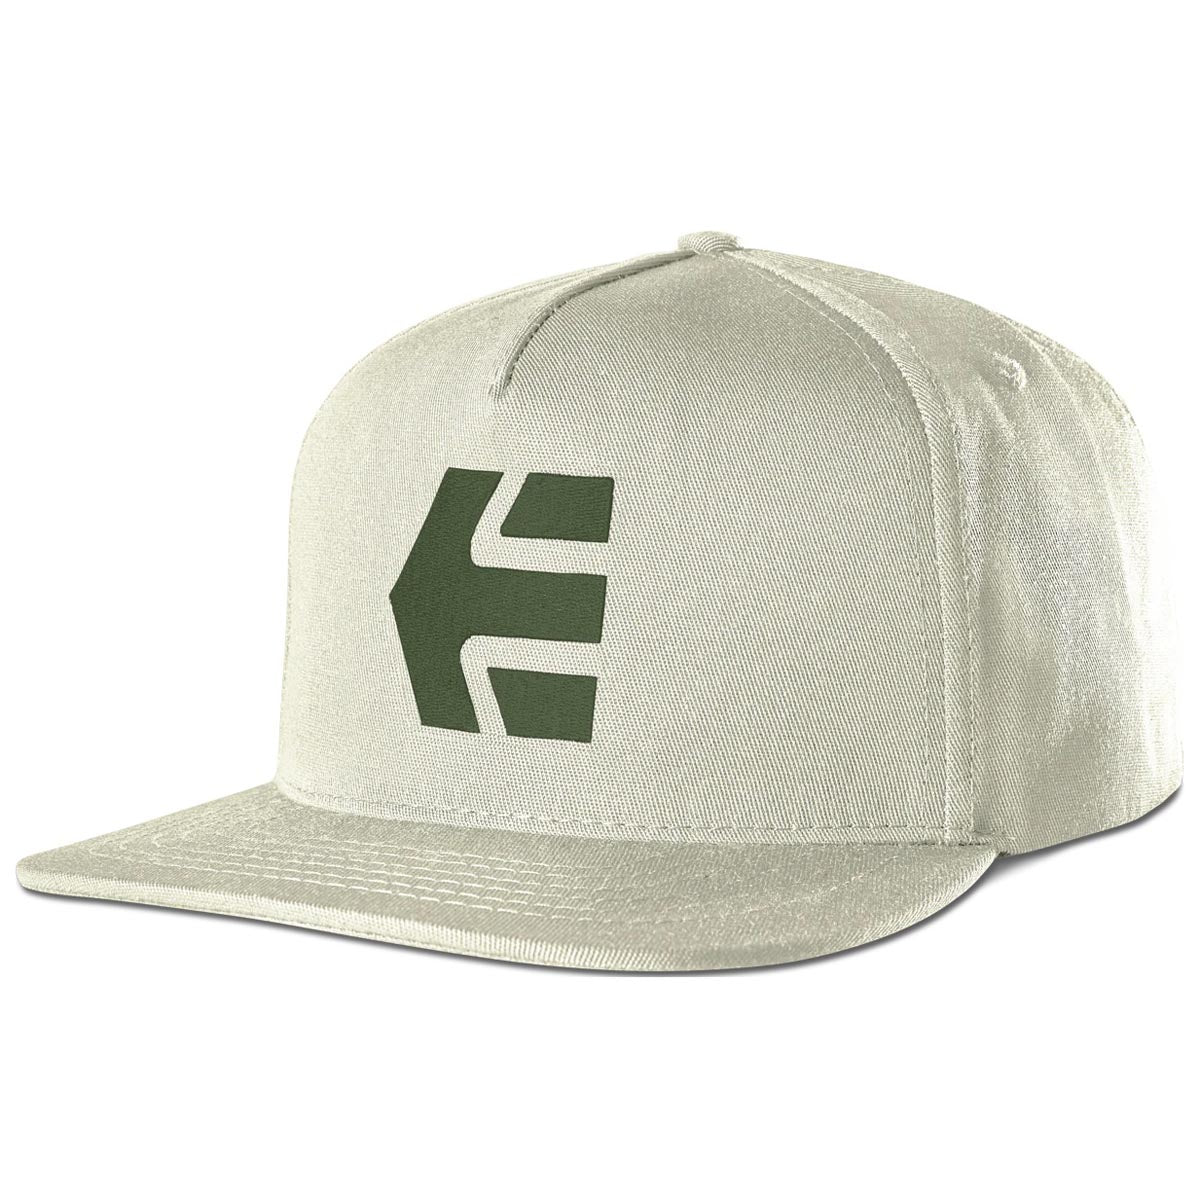 Etnies Icon Snapback Hat - Natural image 1